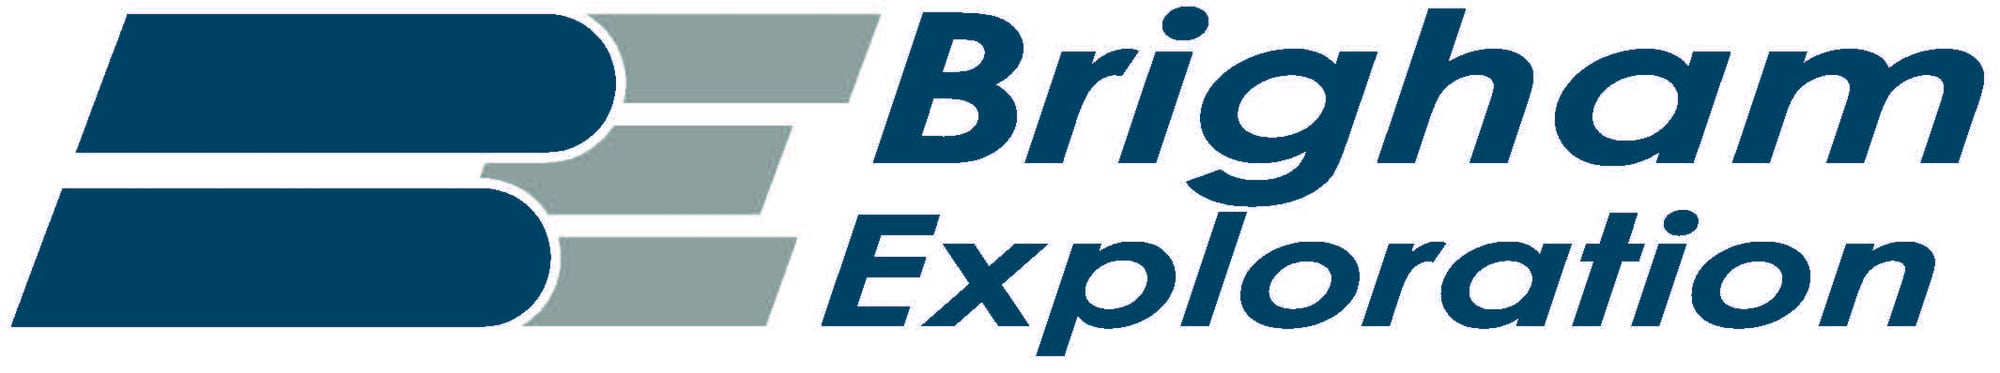 Brigham Exploration Logo CMYK